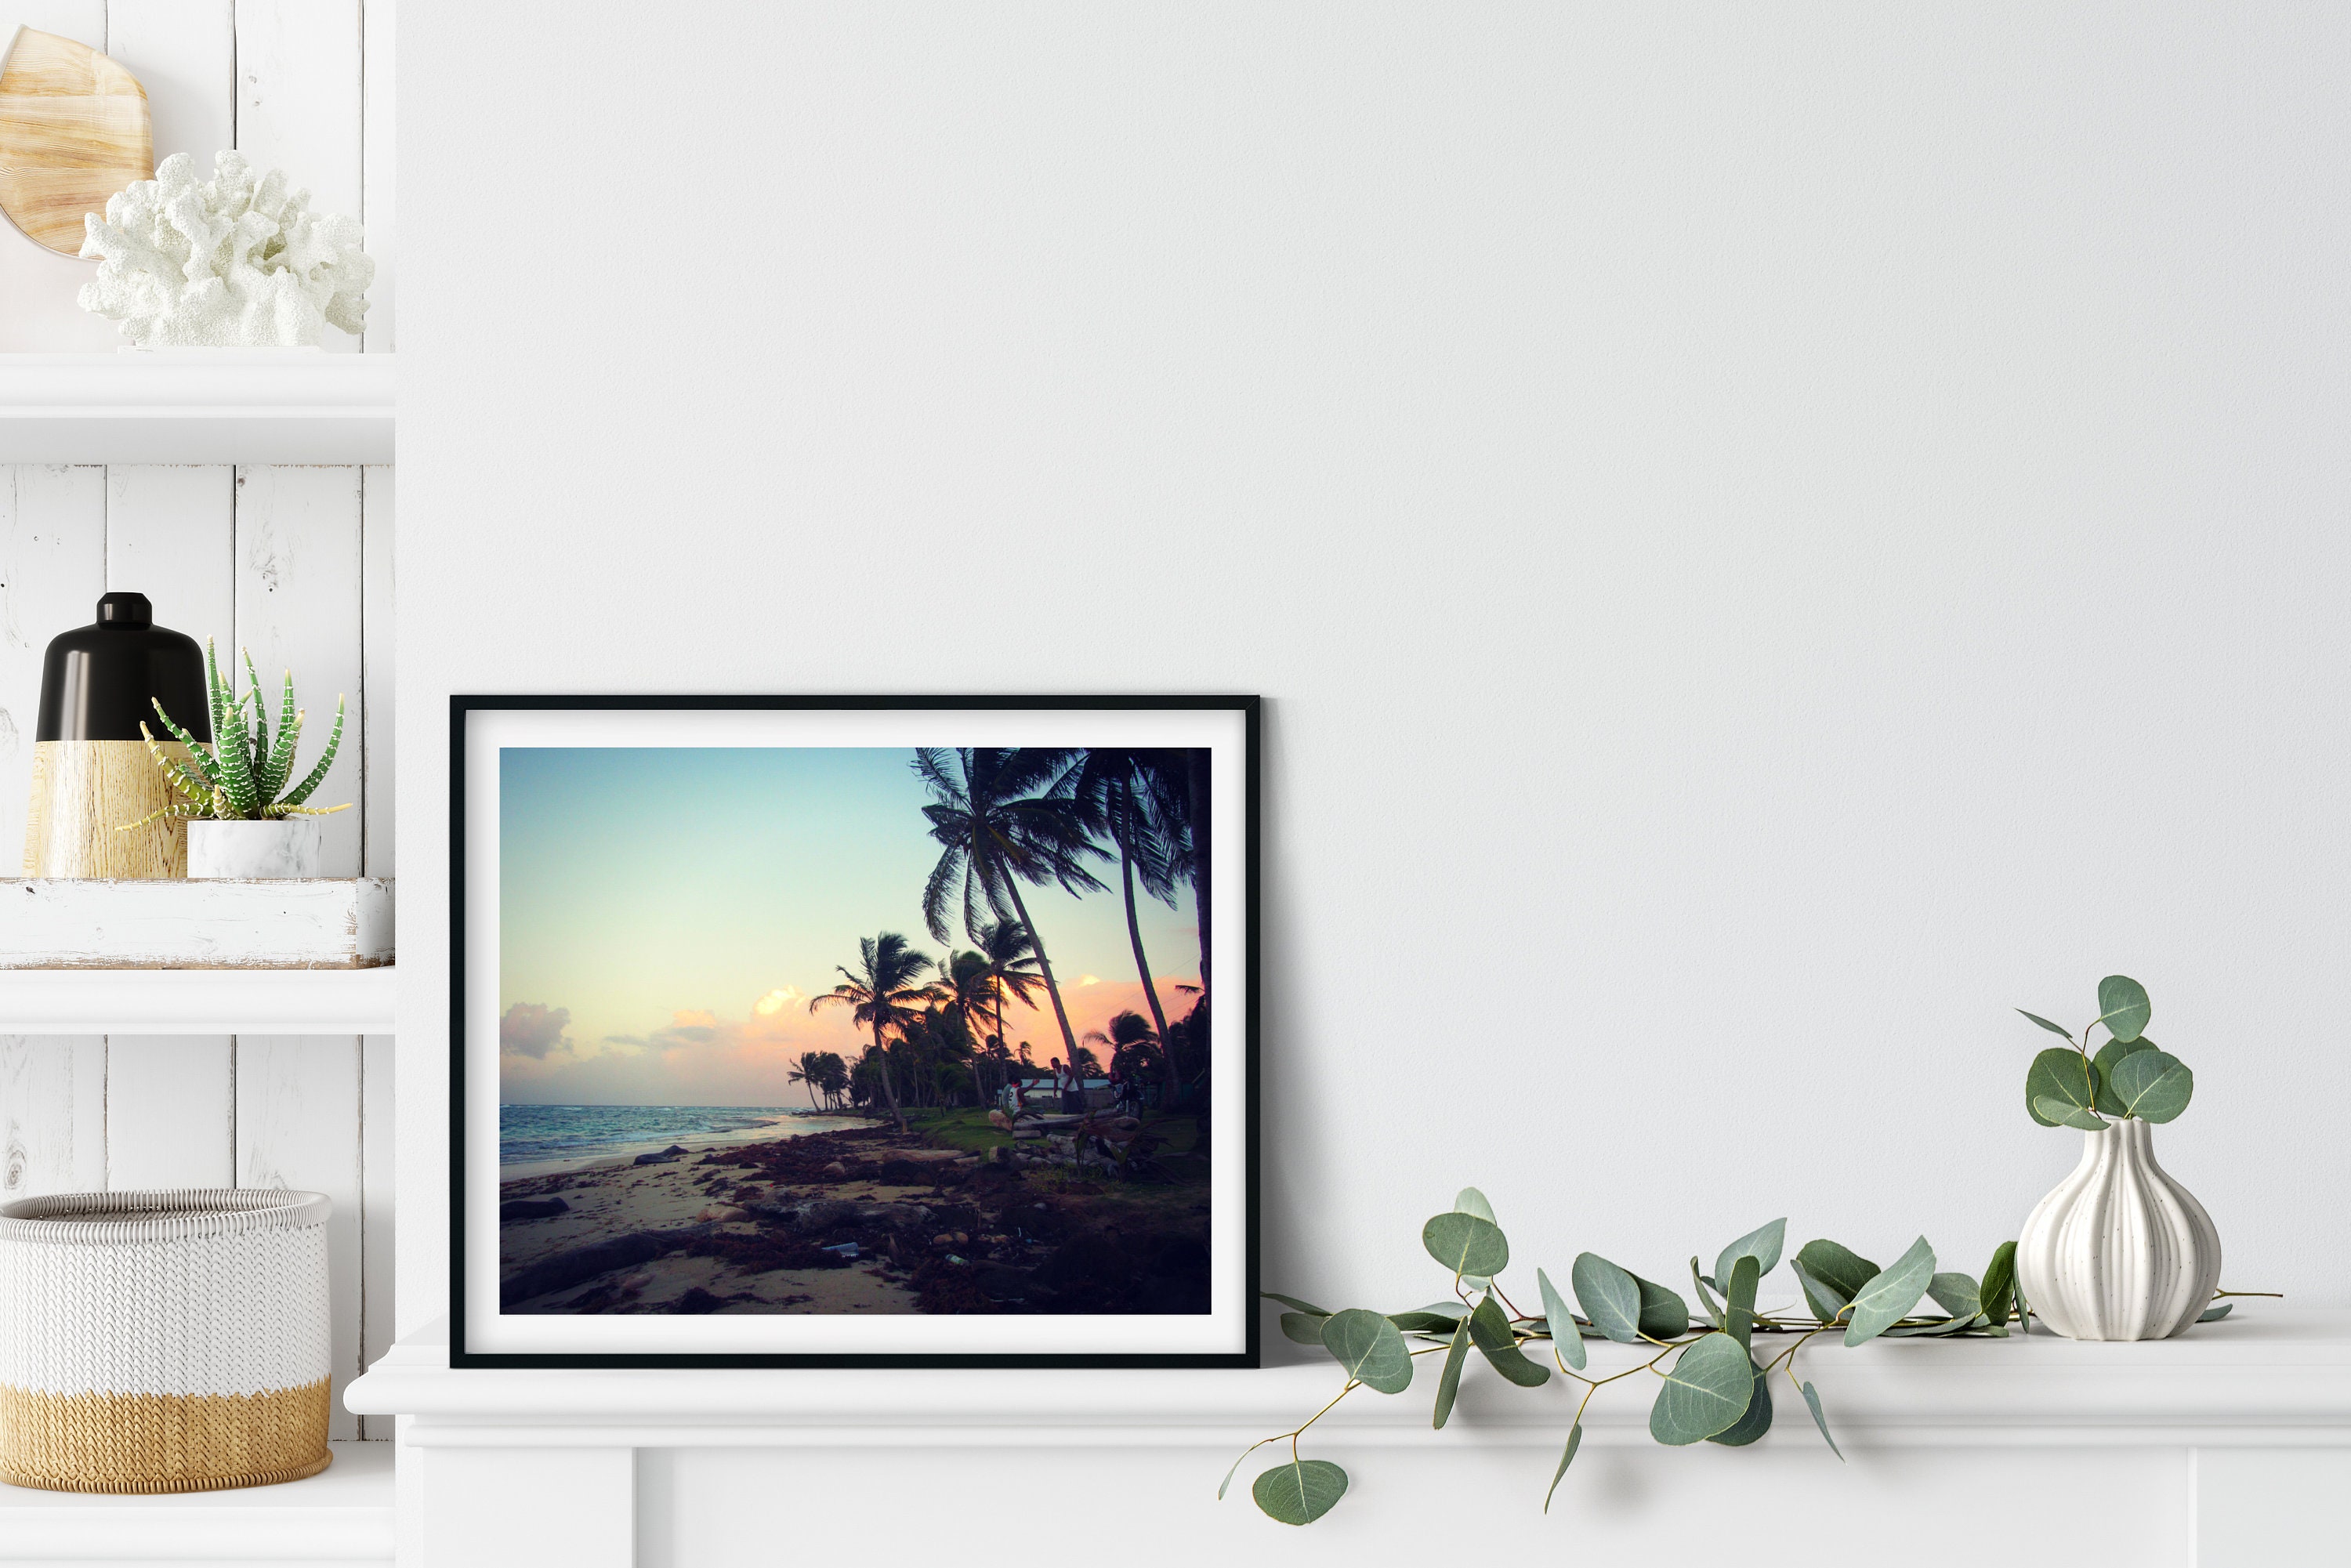 Palm Tree Photo Print, Corn Island, Nicaragua, Sunset Wall Art